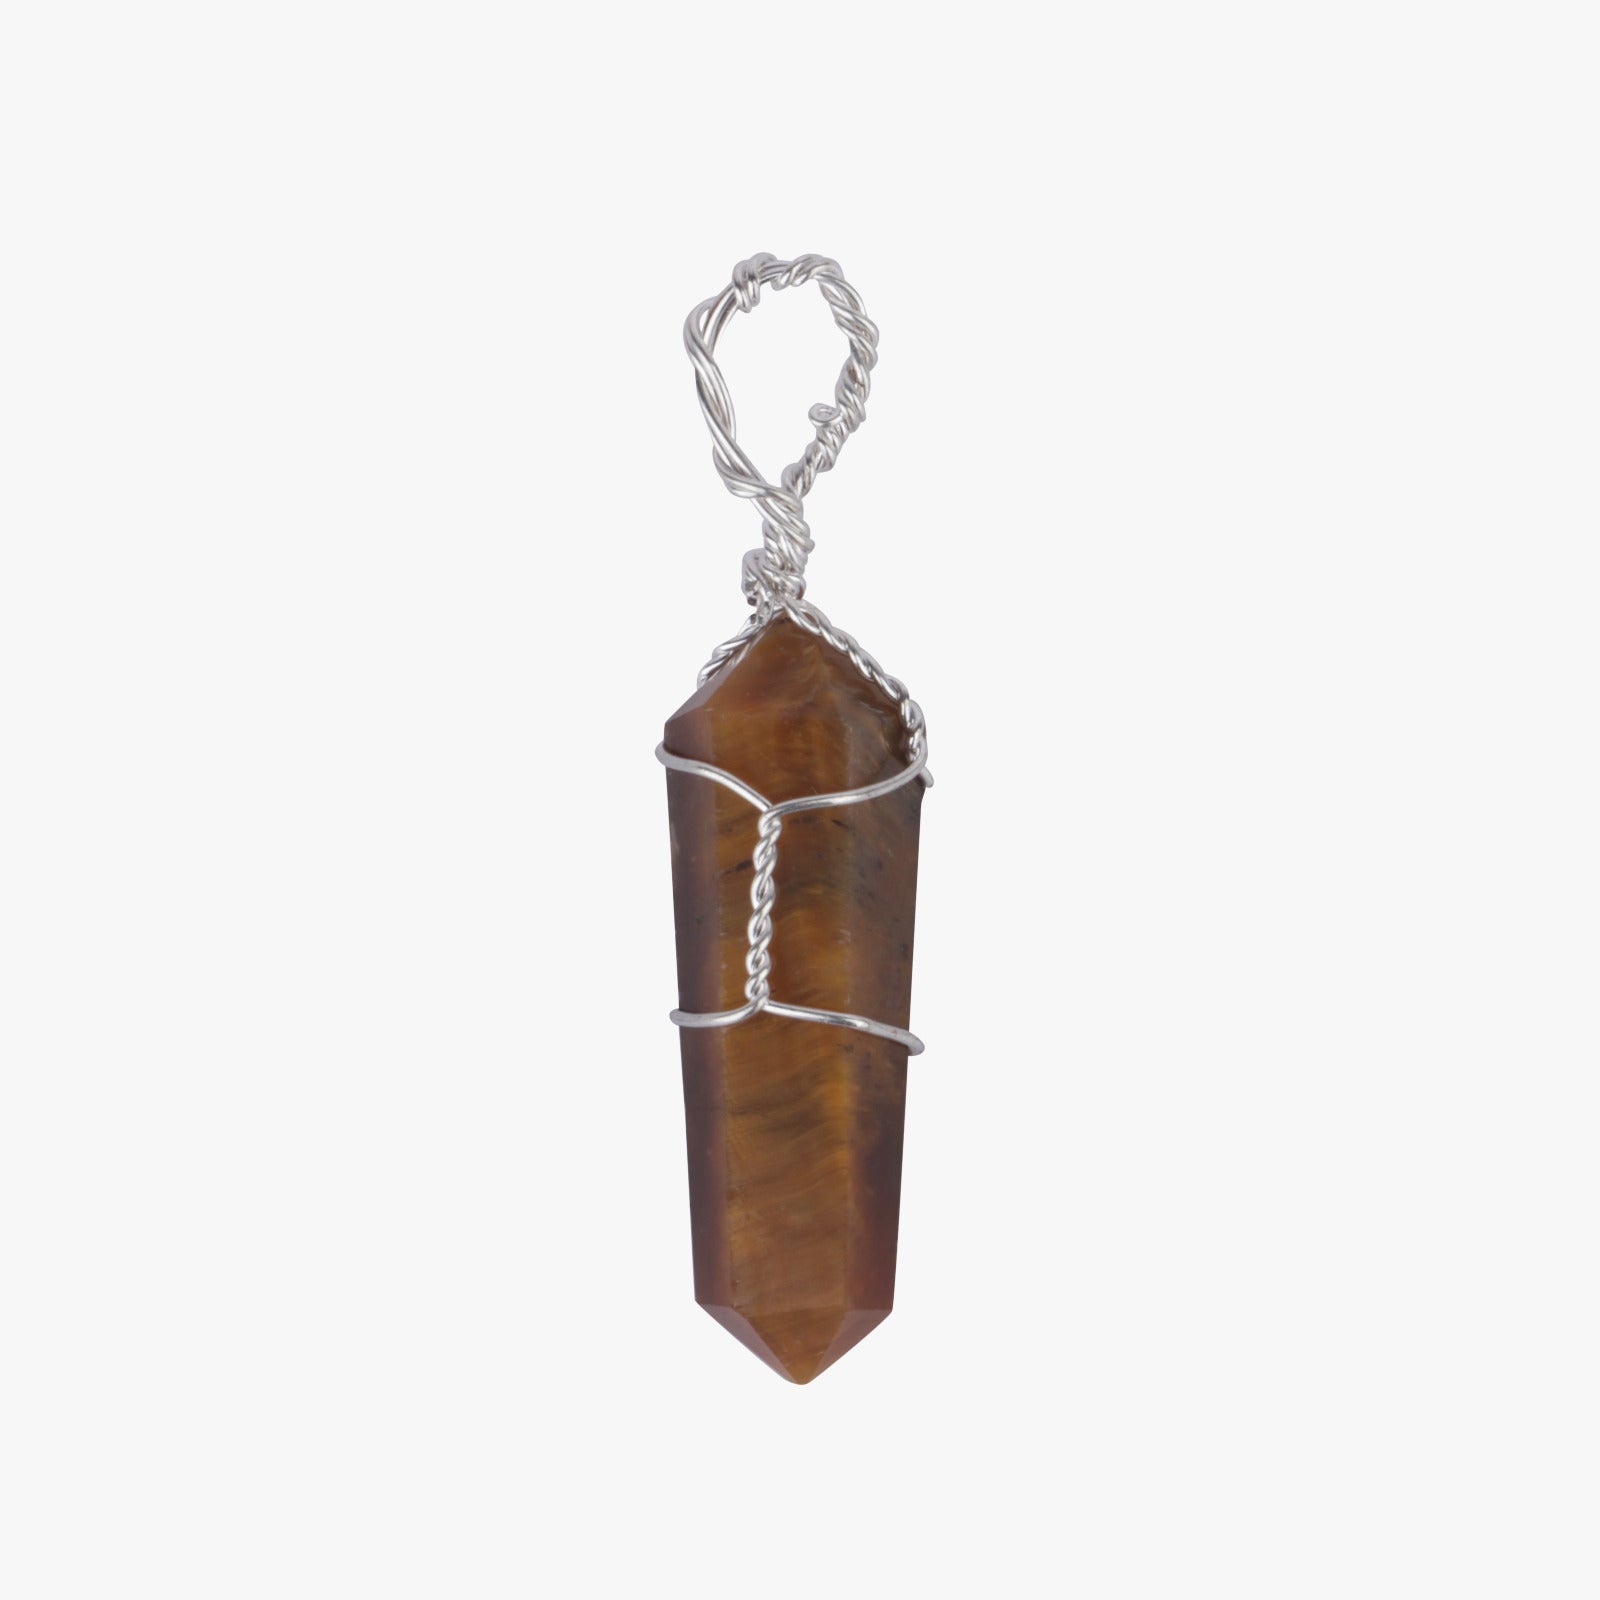 Handmade Wire Wrapped Pendant Natural Stone Crystal Quartz Fluorite Necklace  | eBay